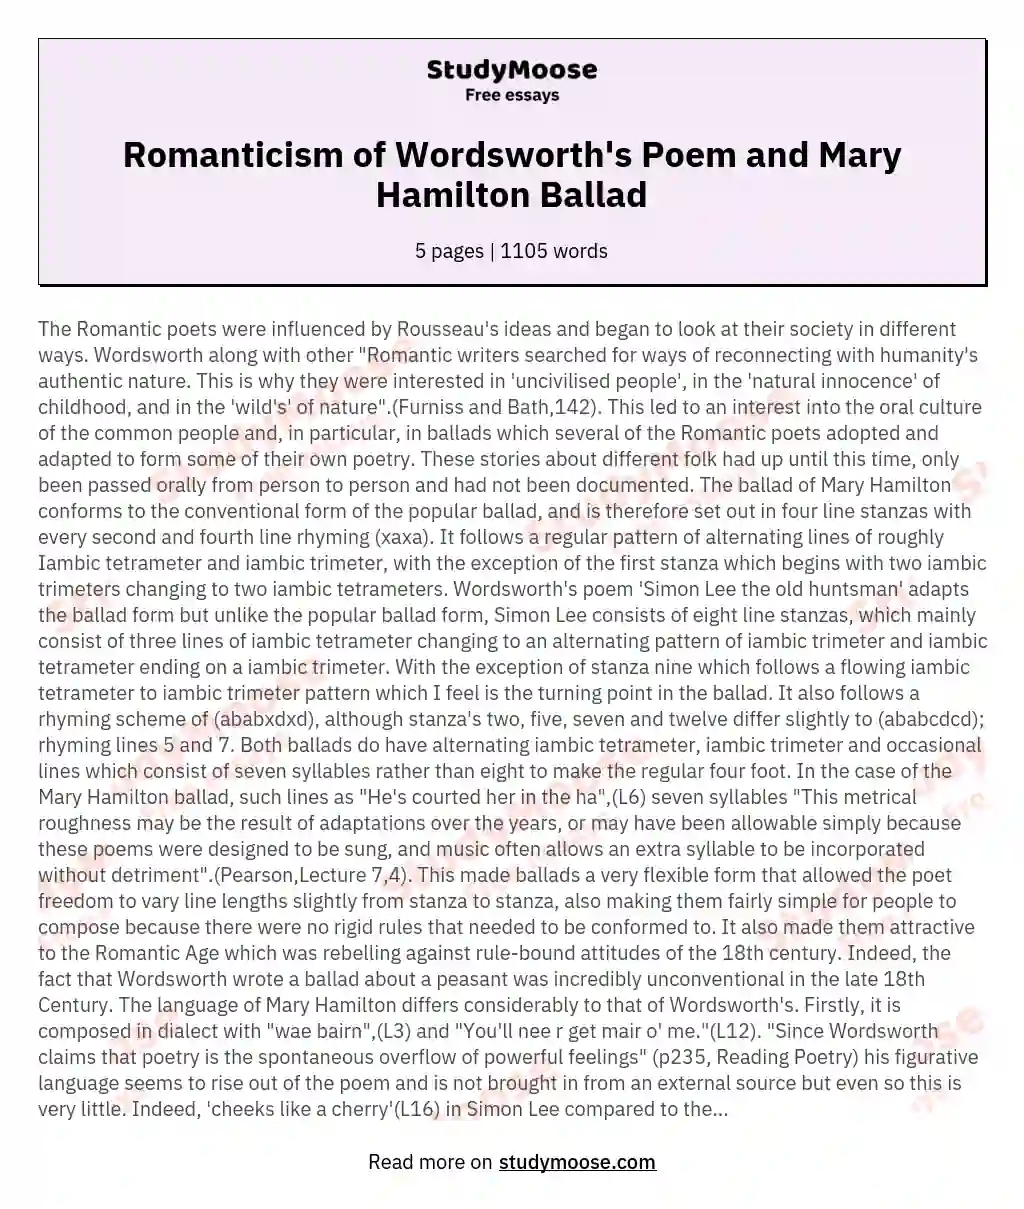 Romanticism of Wordsworth's Poem and Mary Hamilton Ballad essay